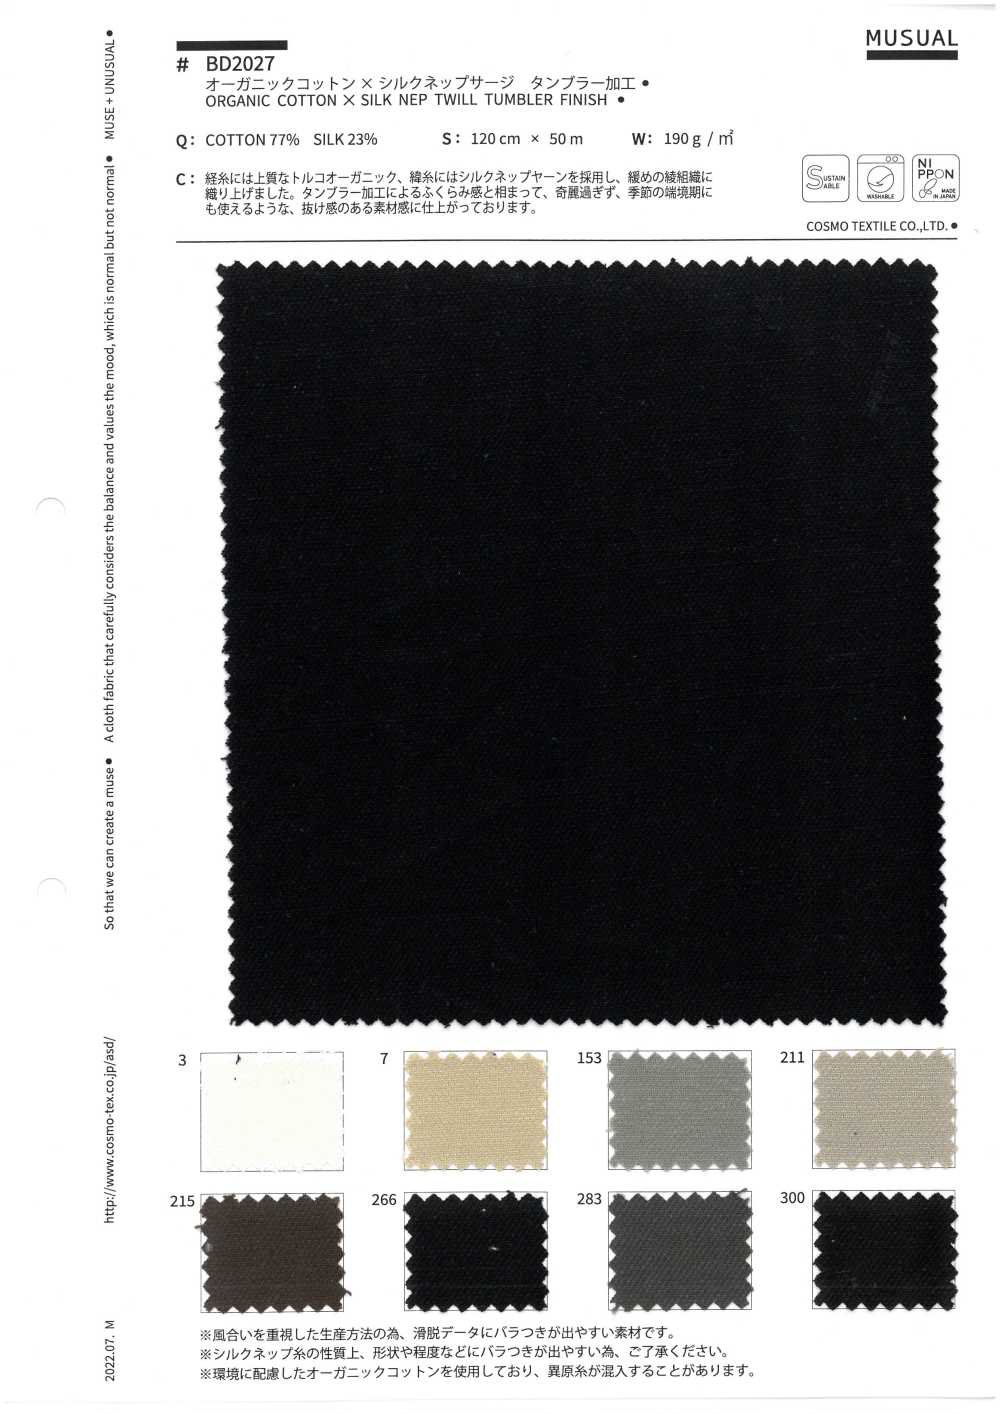 BD2027 Organic Cotton/silk Serge Tunbler Processing[Textile / Fabric] COSMO TEXTILE